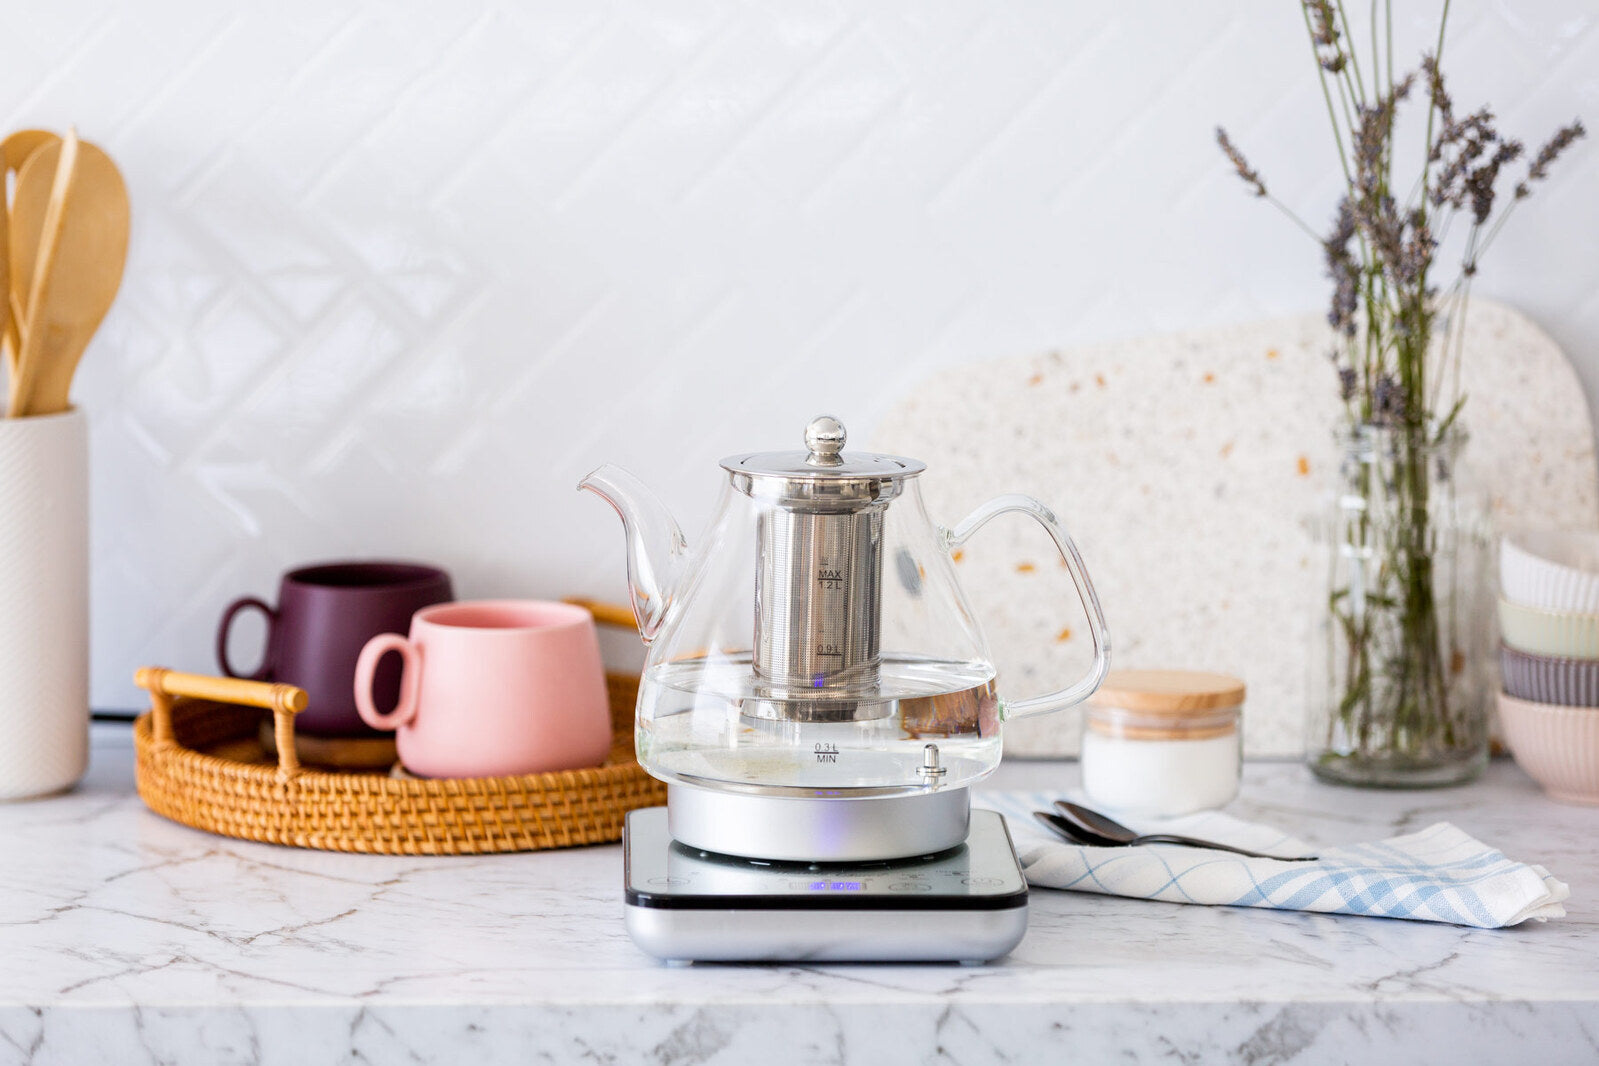 1.2L Digital Glass Kettle w/ Electric Tea Pot & Infuser 800W